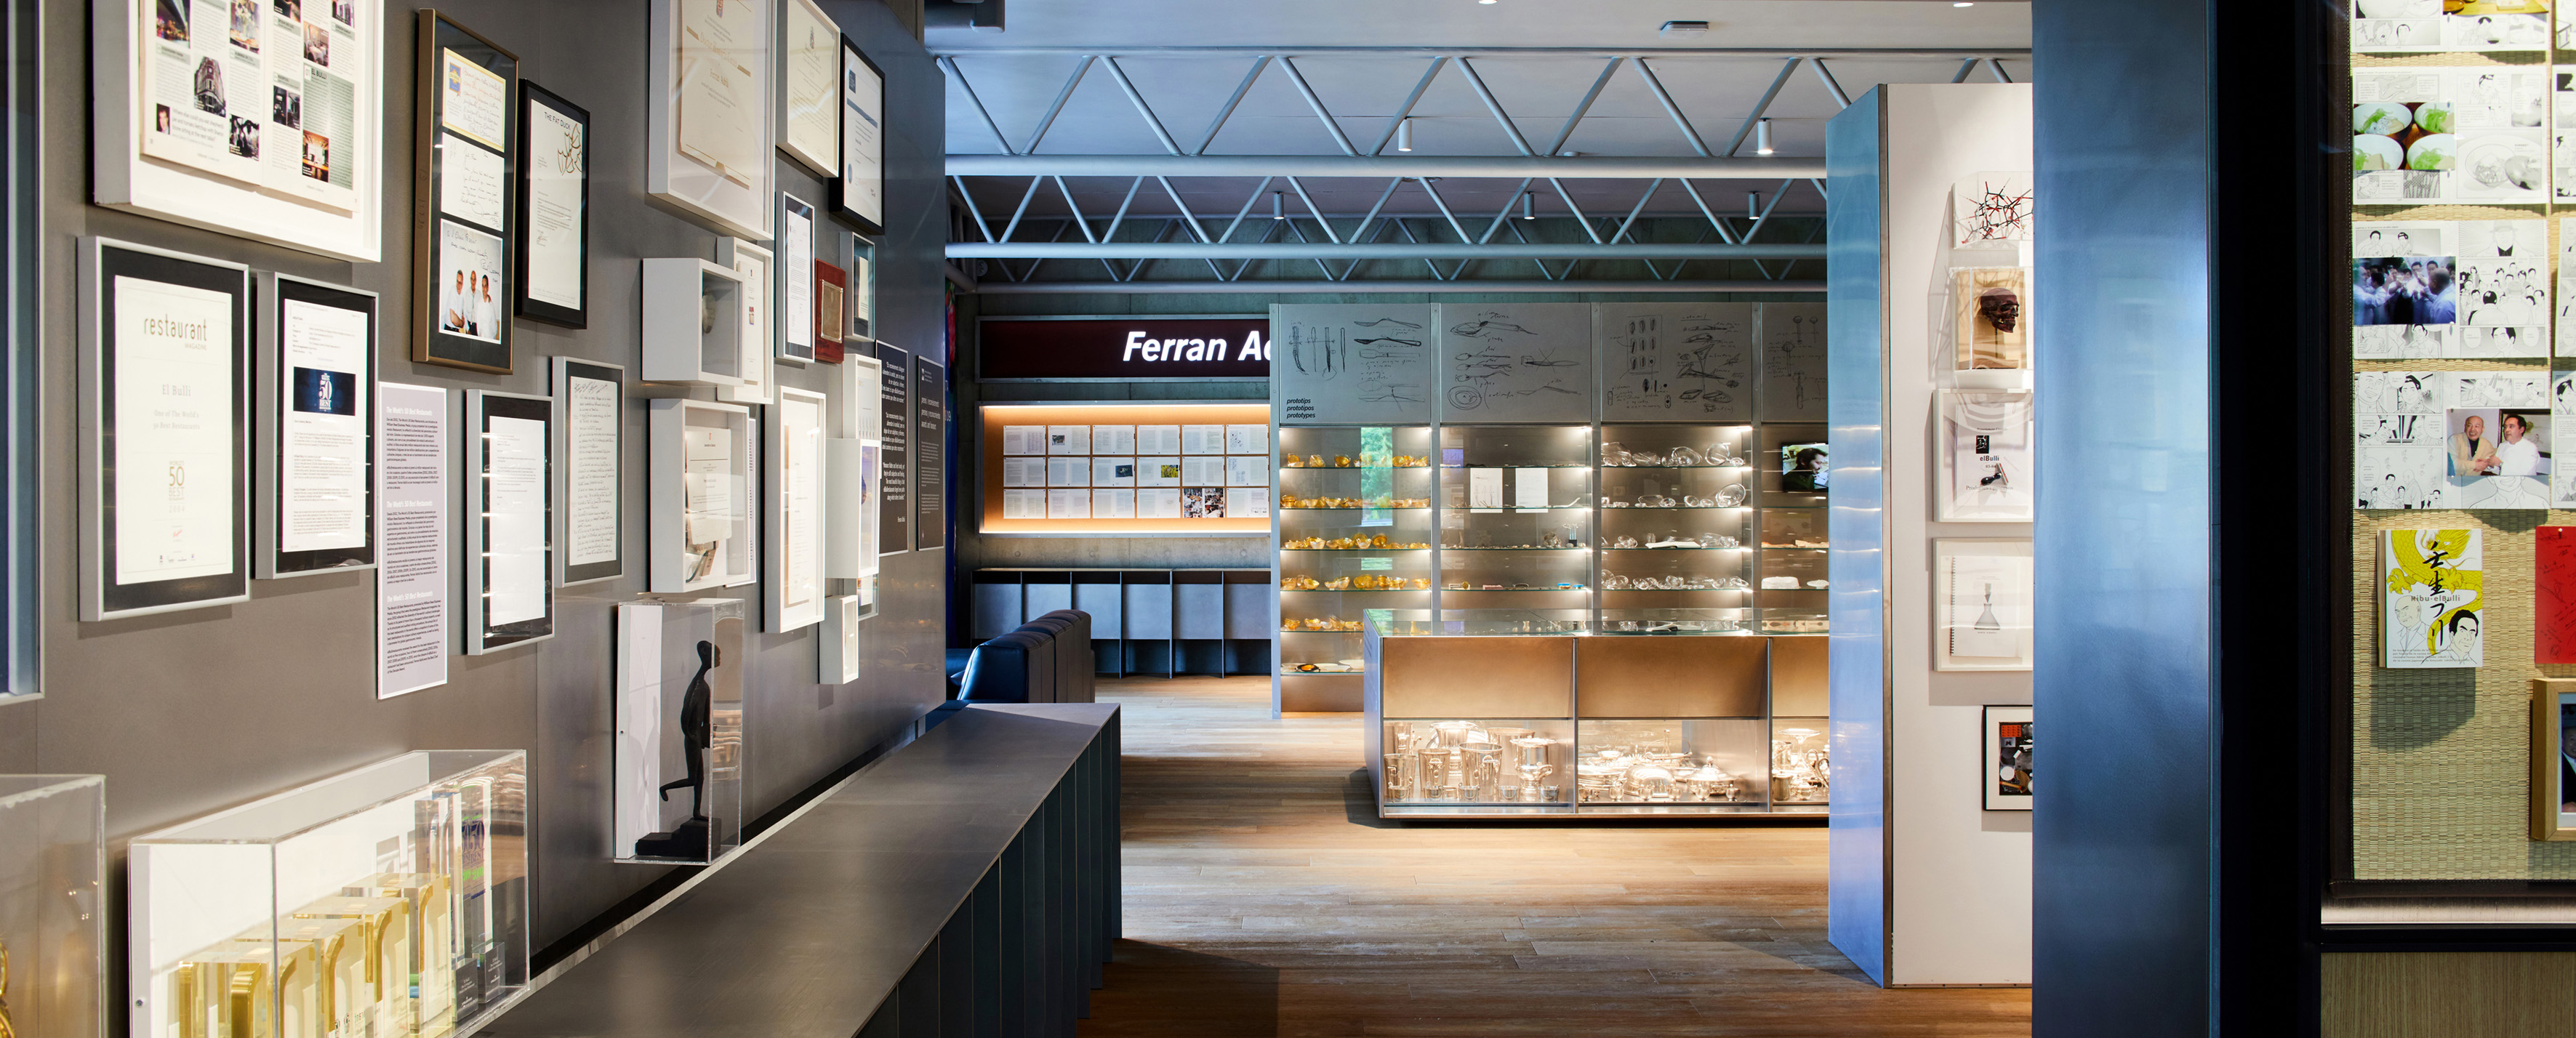 Ferran Adrià's El Bulli restaurant reopens 12 years